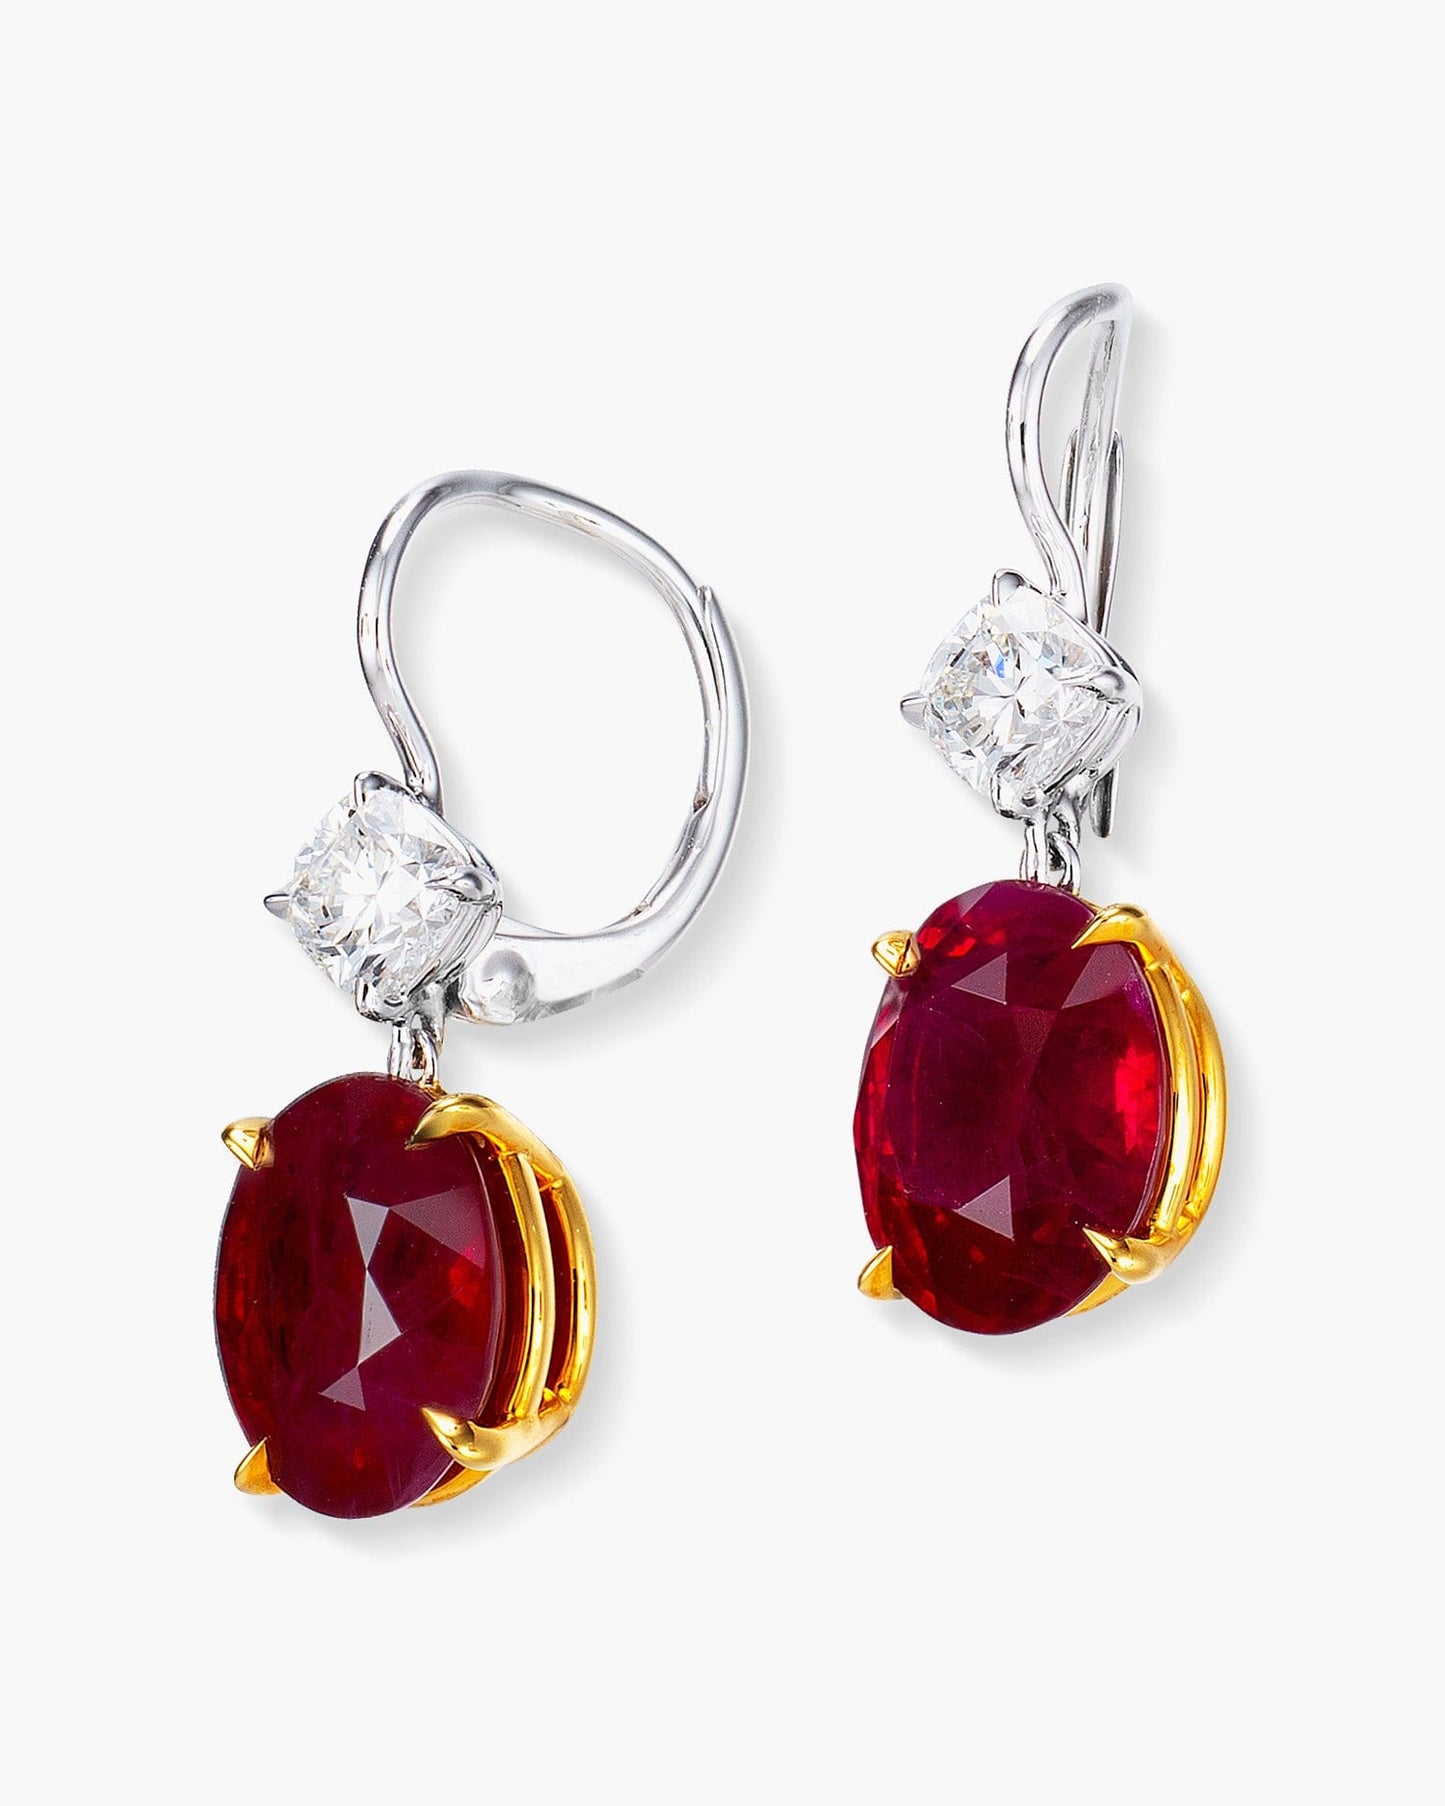 6.42 carat Oval Shape Burmese Ruby and Diamond Earrings